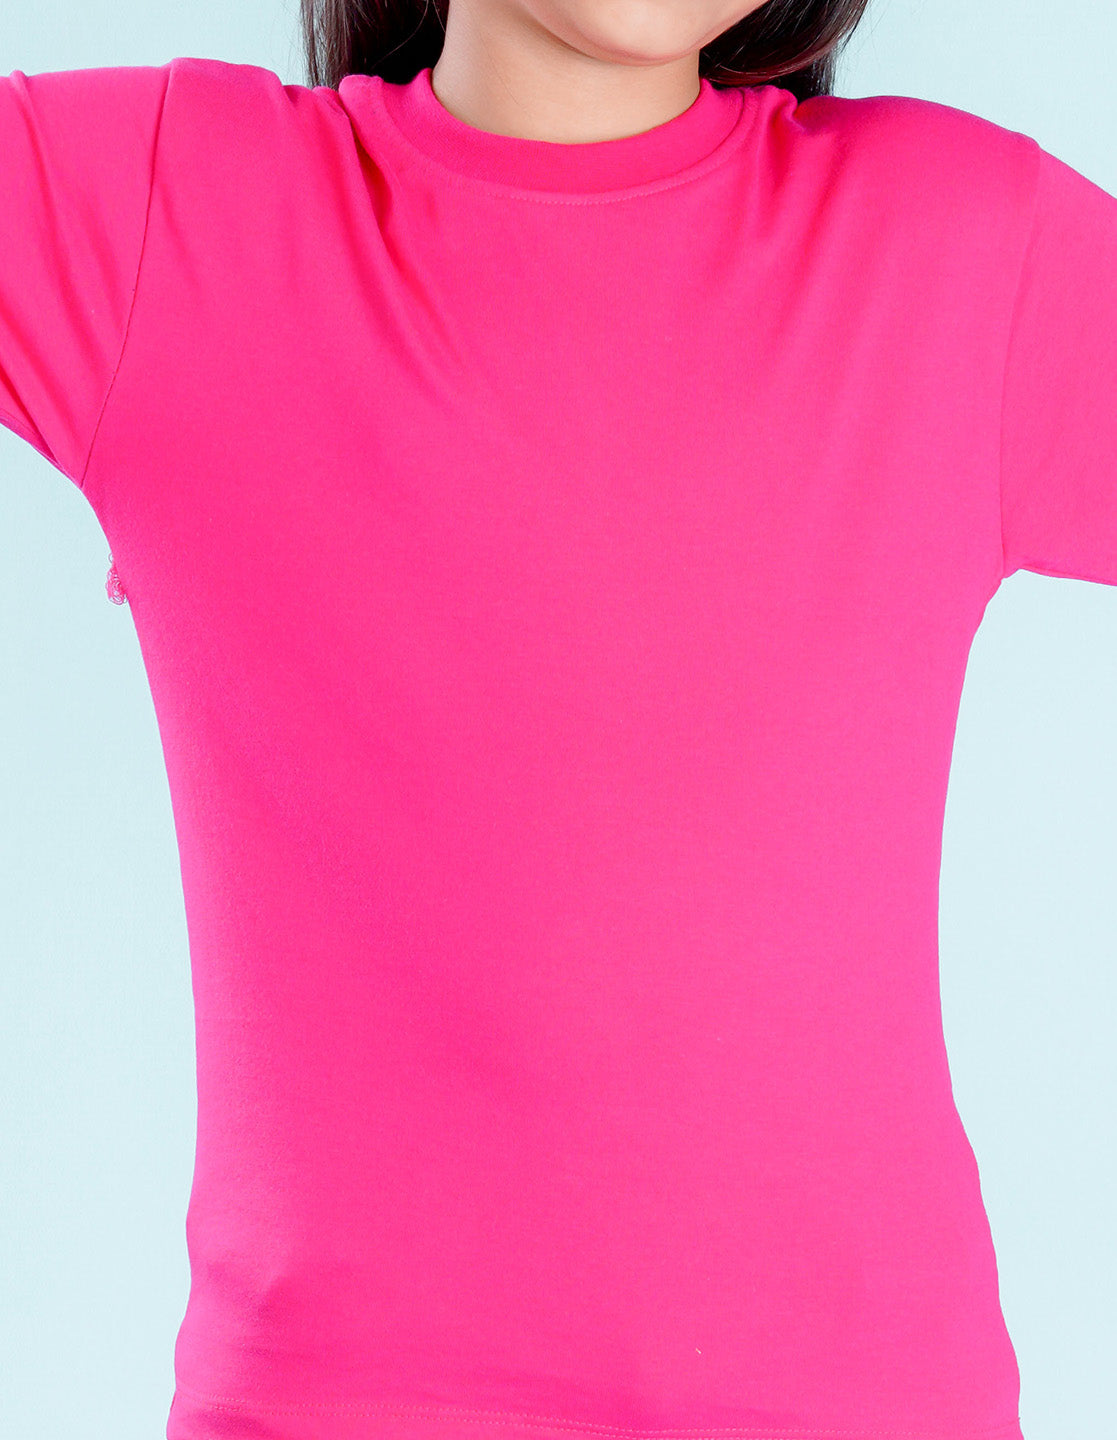 Nusyl Girls Solid Hot Pink Oversized T-shirt